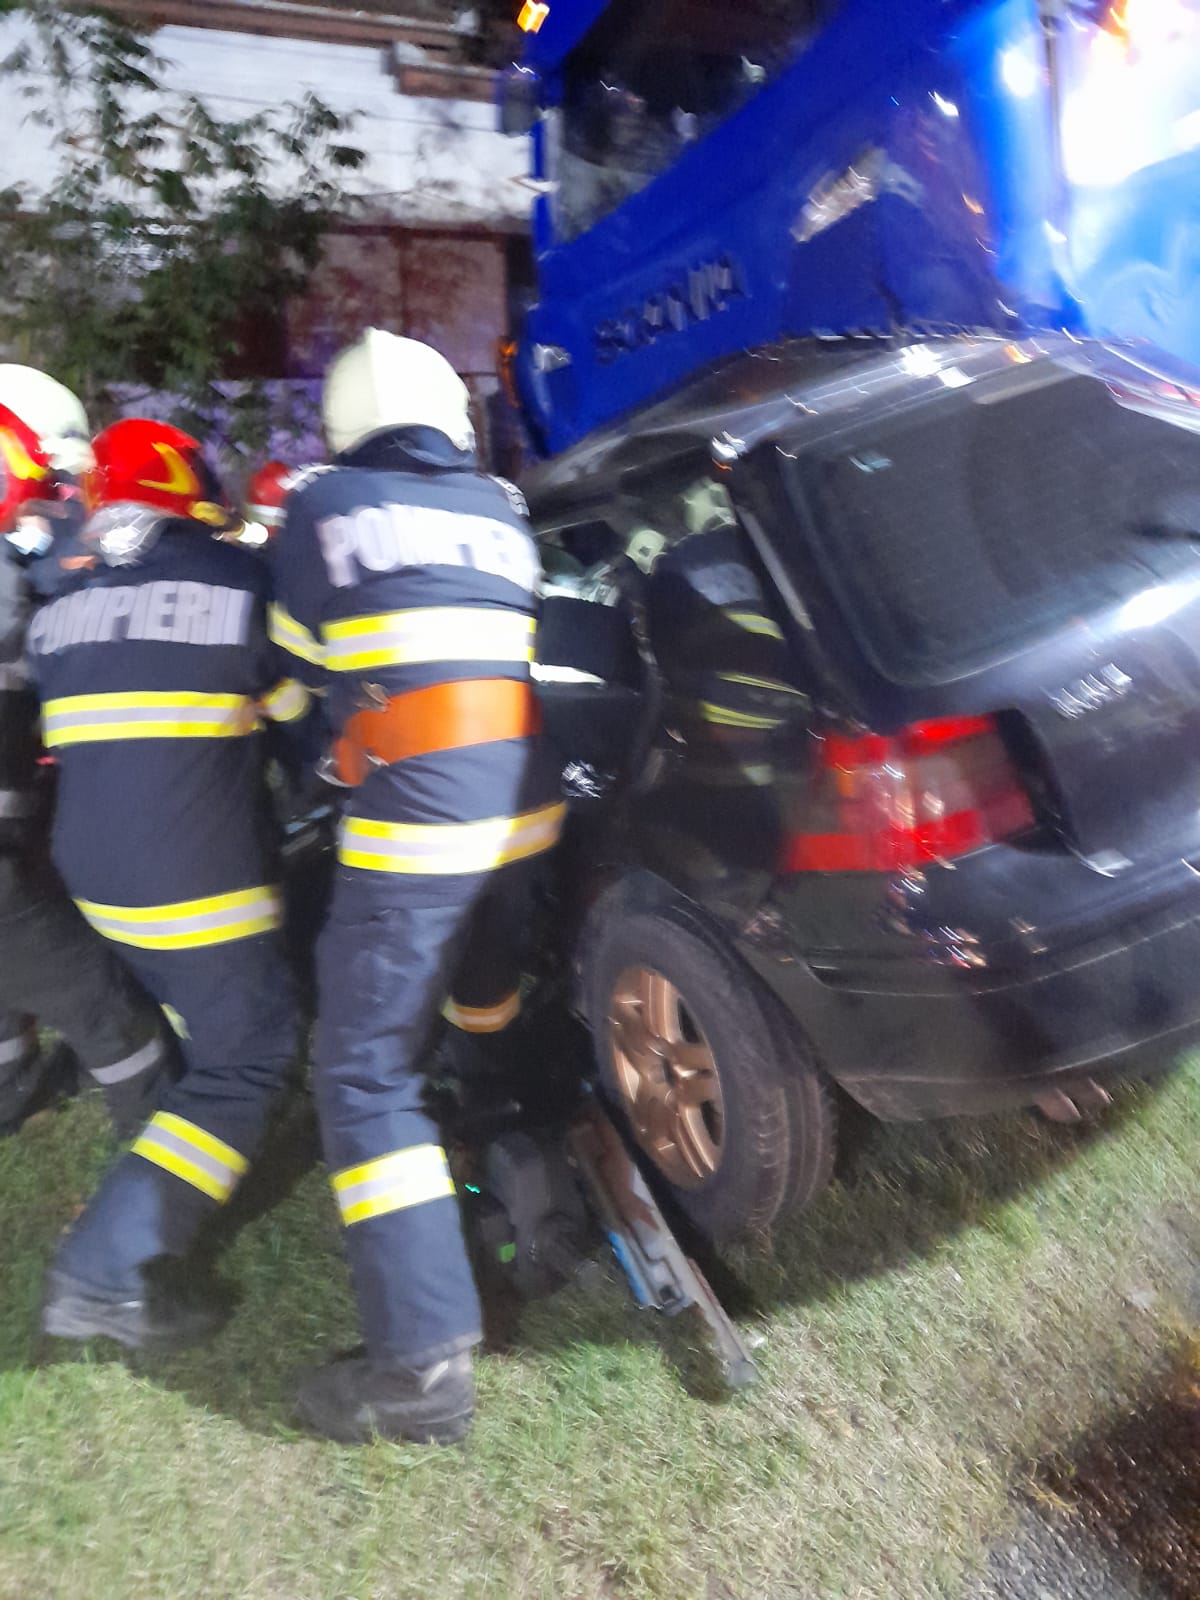 Accident mortal Caraș-Severin